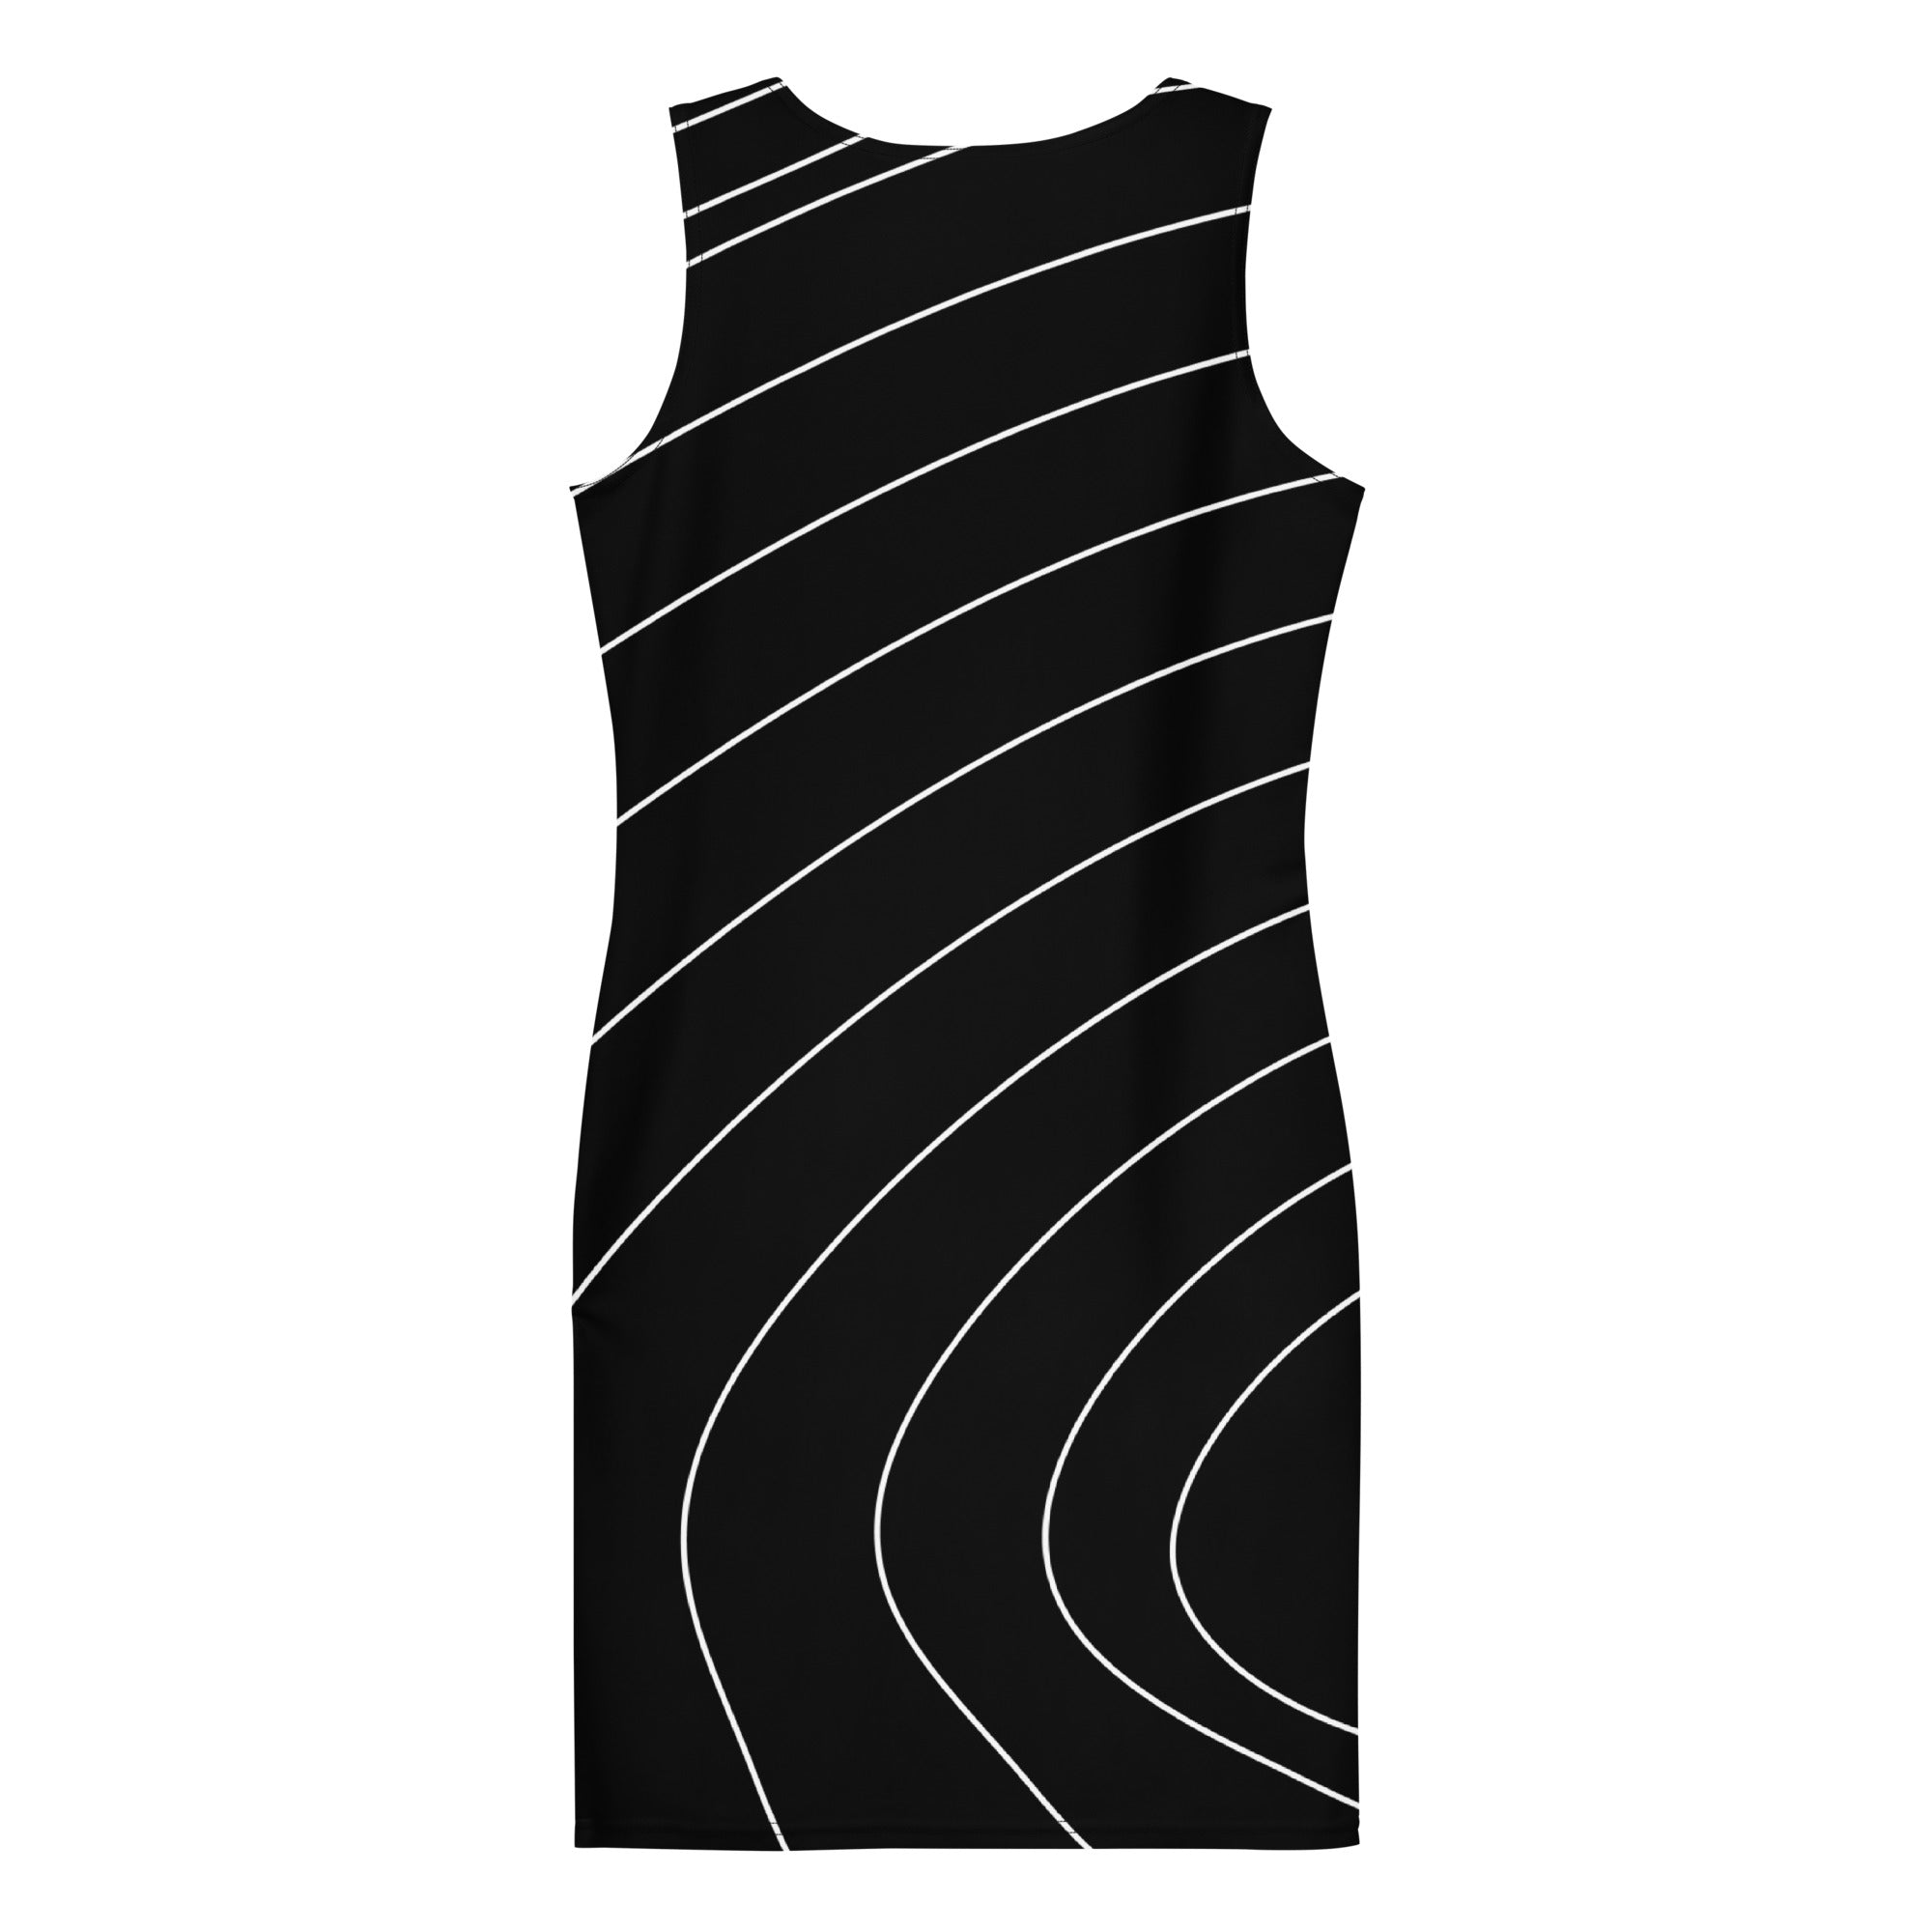 BE3 Swirls Sublimation Cut & Sew Dress